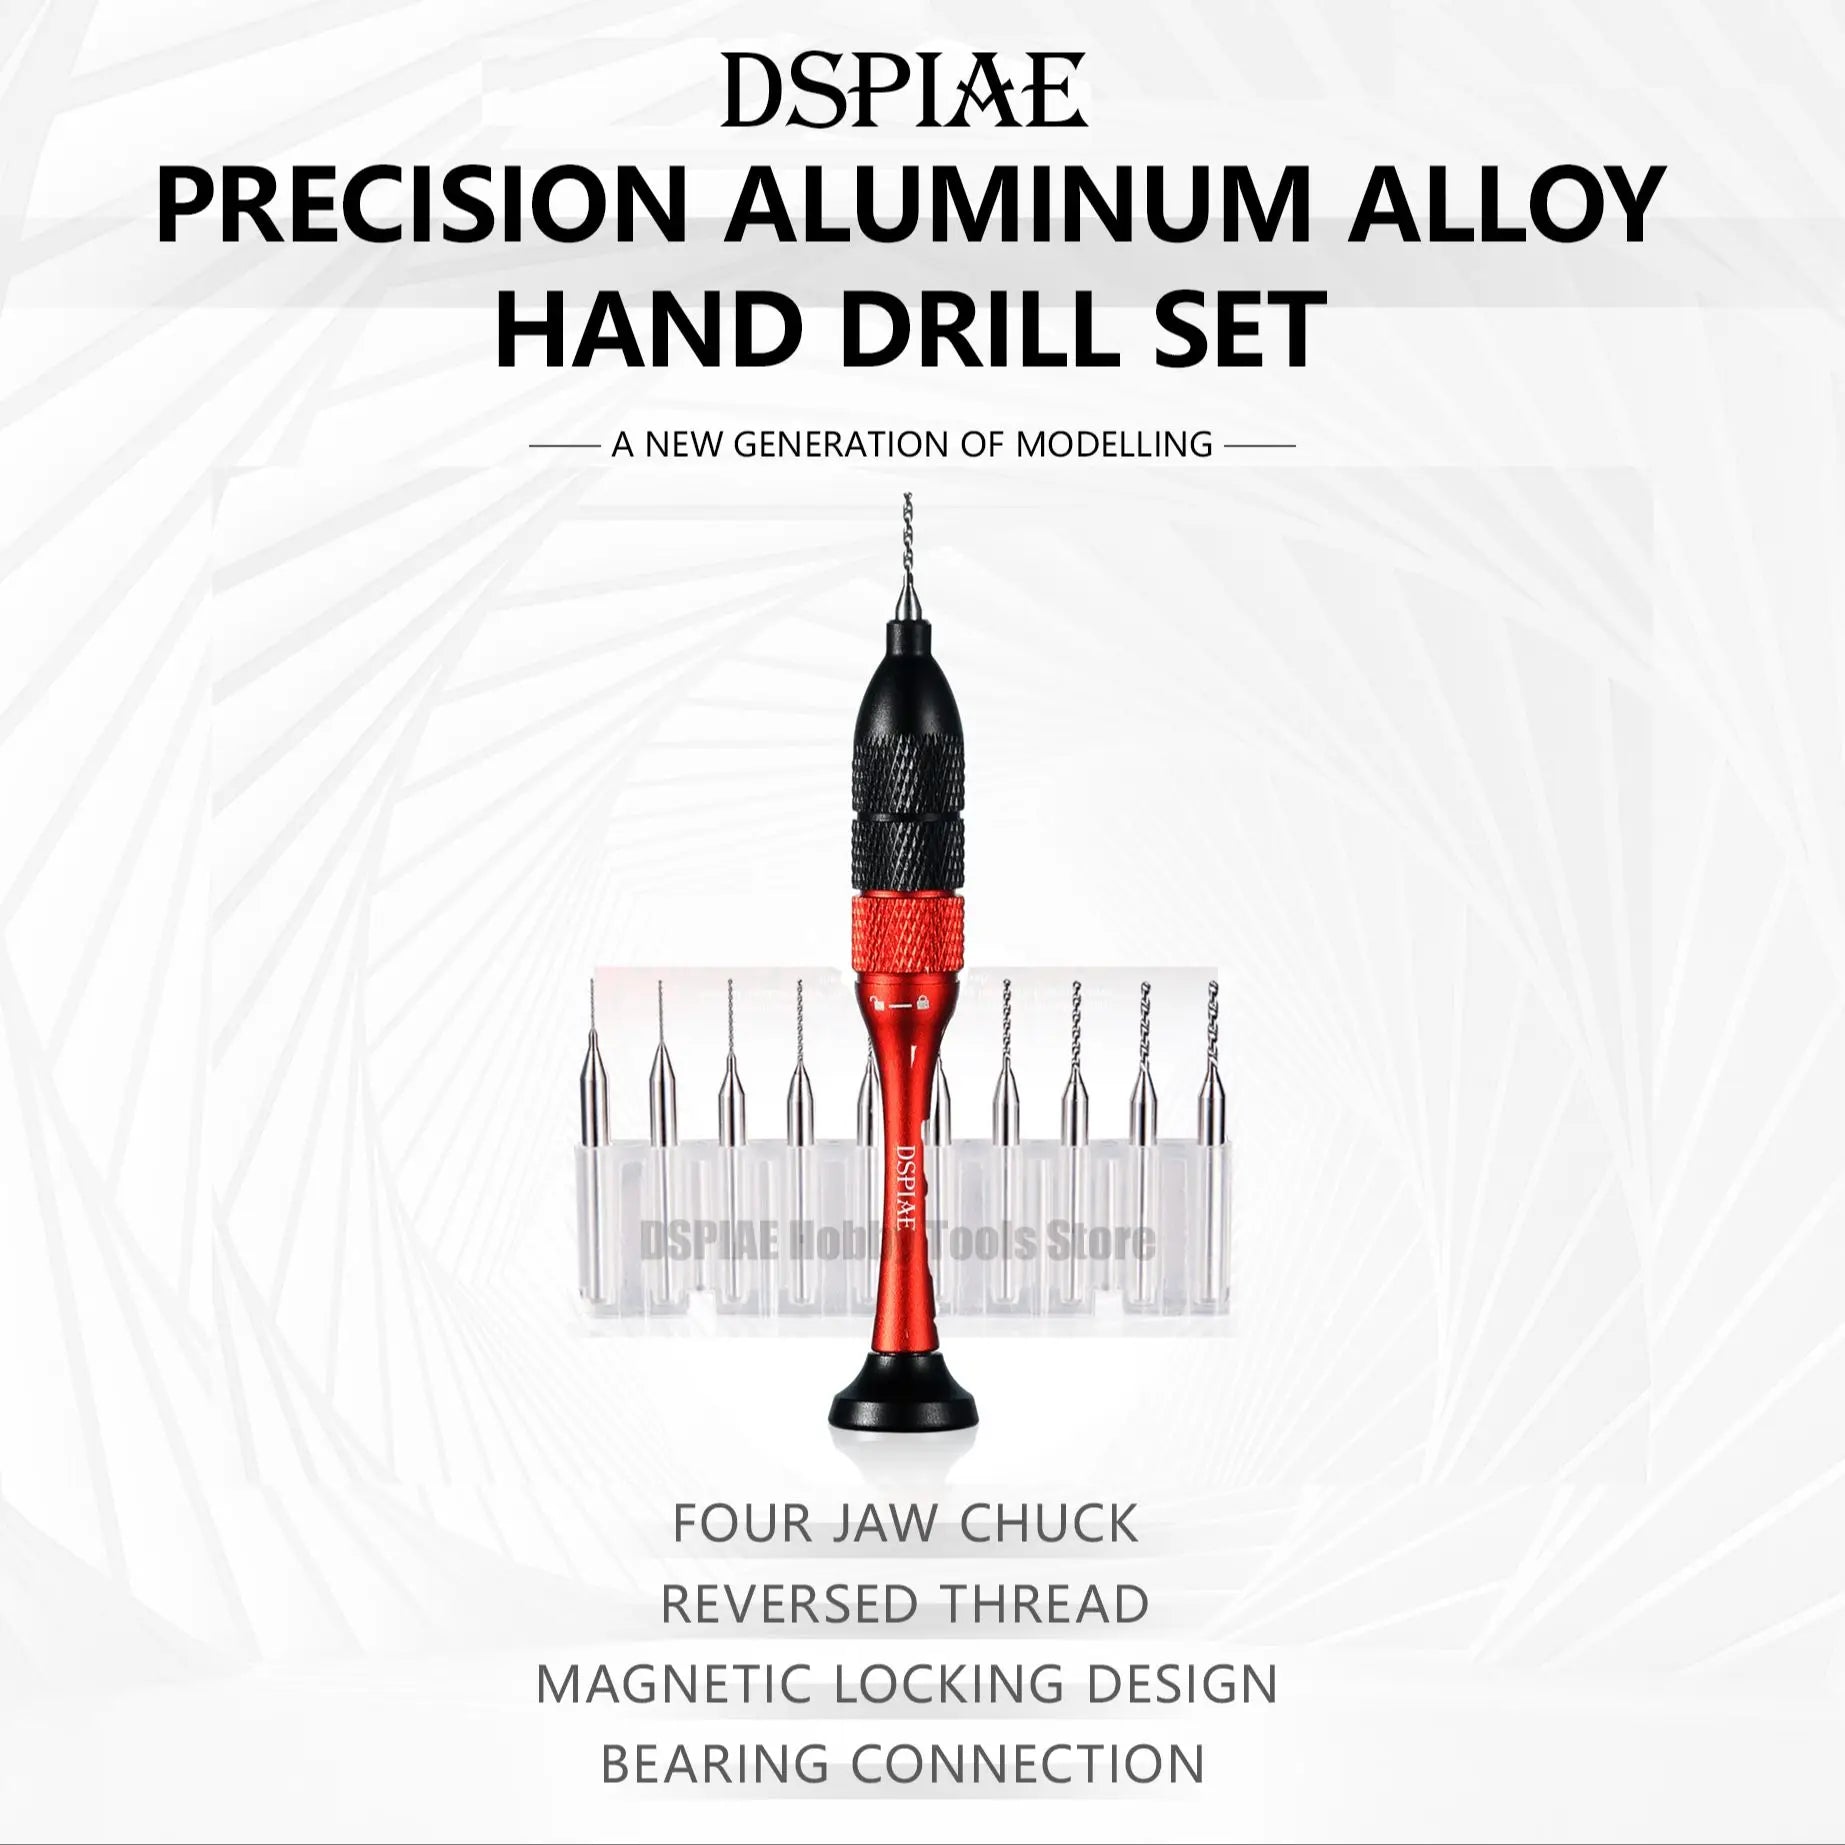 Dspiae AT-SHD Aluminum Alloy Hand Drill Set